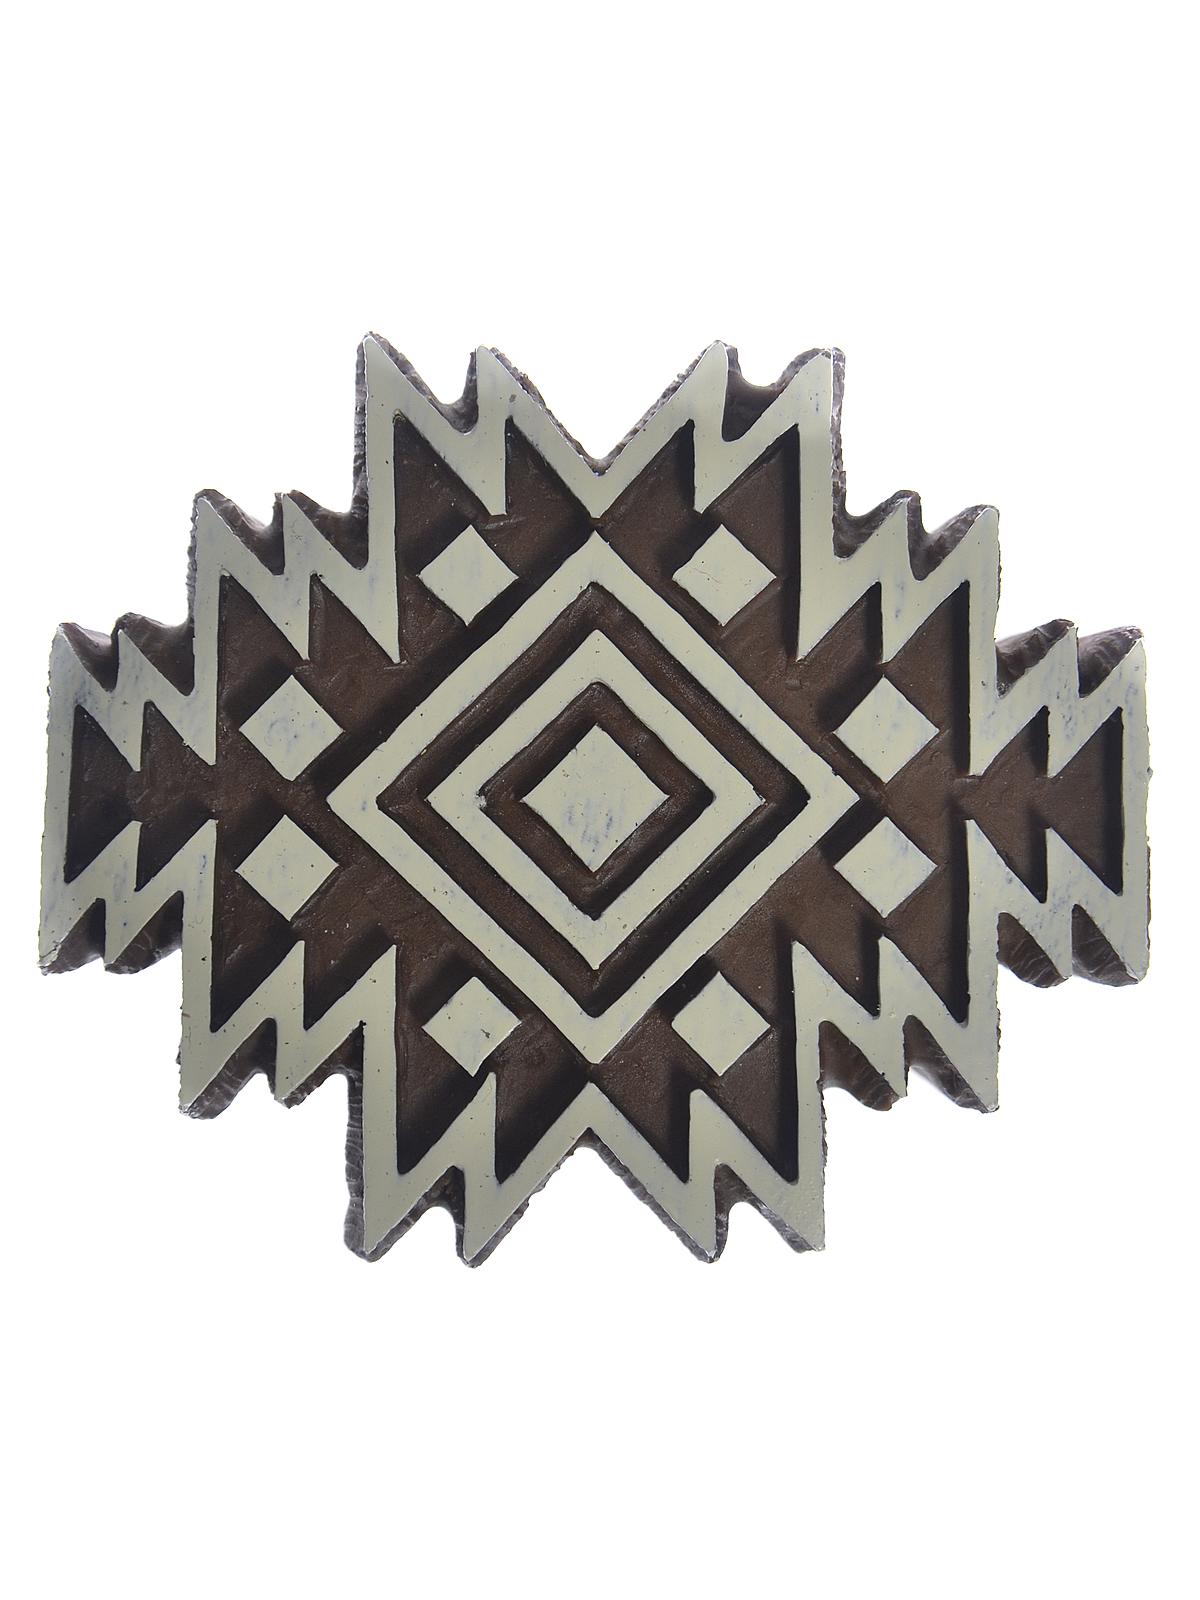 Fabric Creations Block Printing Stamps Medium Aztec Tile Each